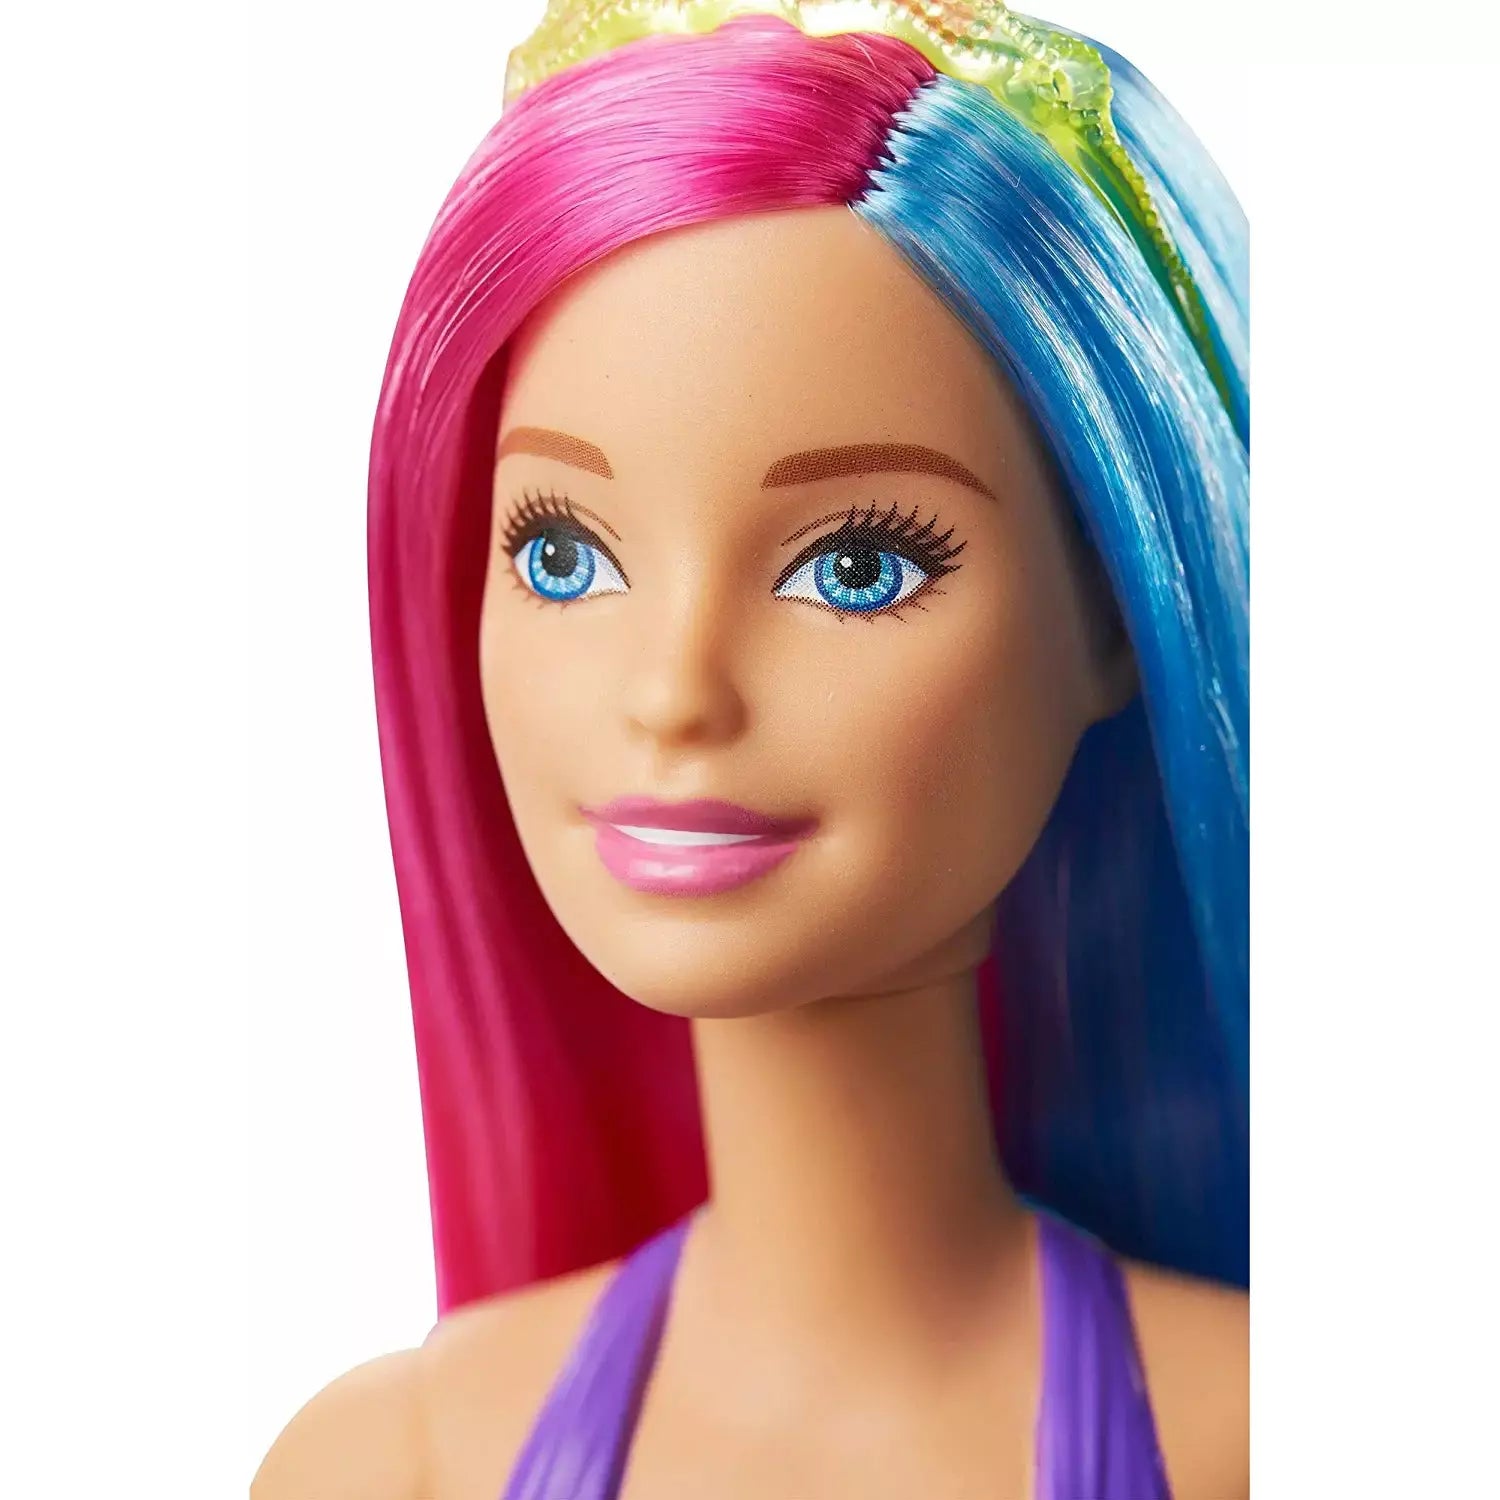 Barbie Dreamtopia Mermaid Doll, 12-inch, Pink and Blue Hair - BumbleToys - 5-7 Years, Barbie, Fashion Dolls & Accessories, Girls, Mermaid, Pre-Order